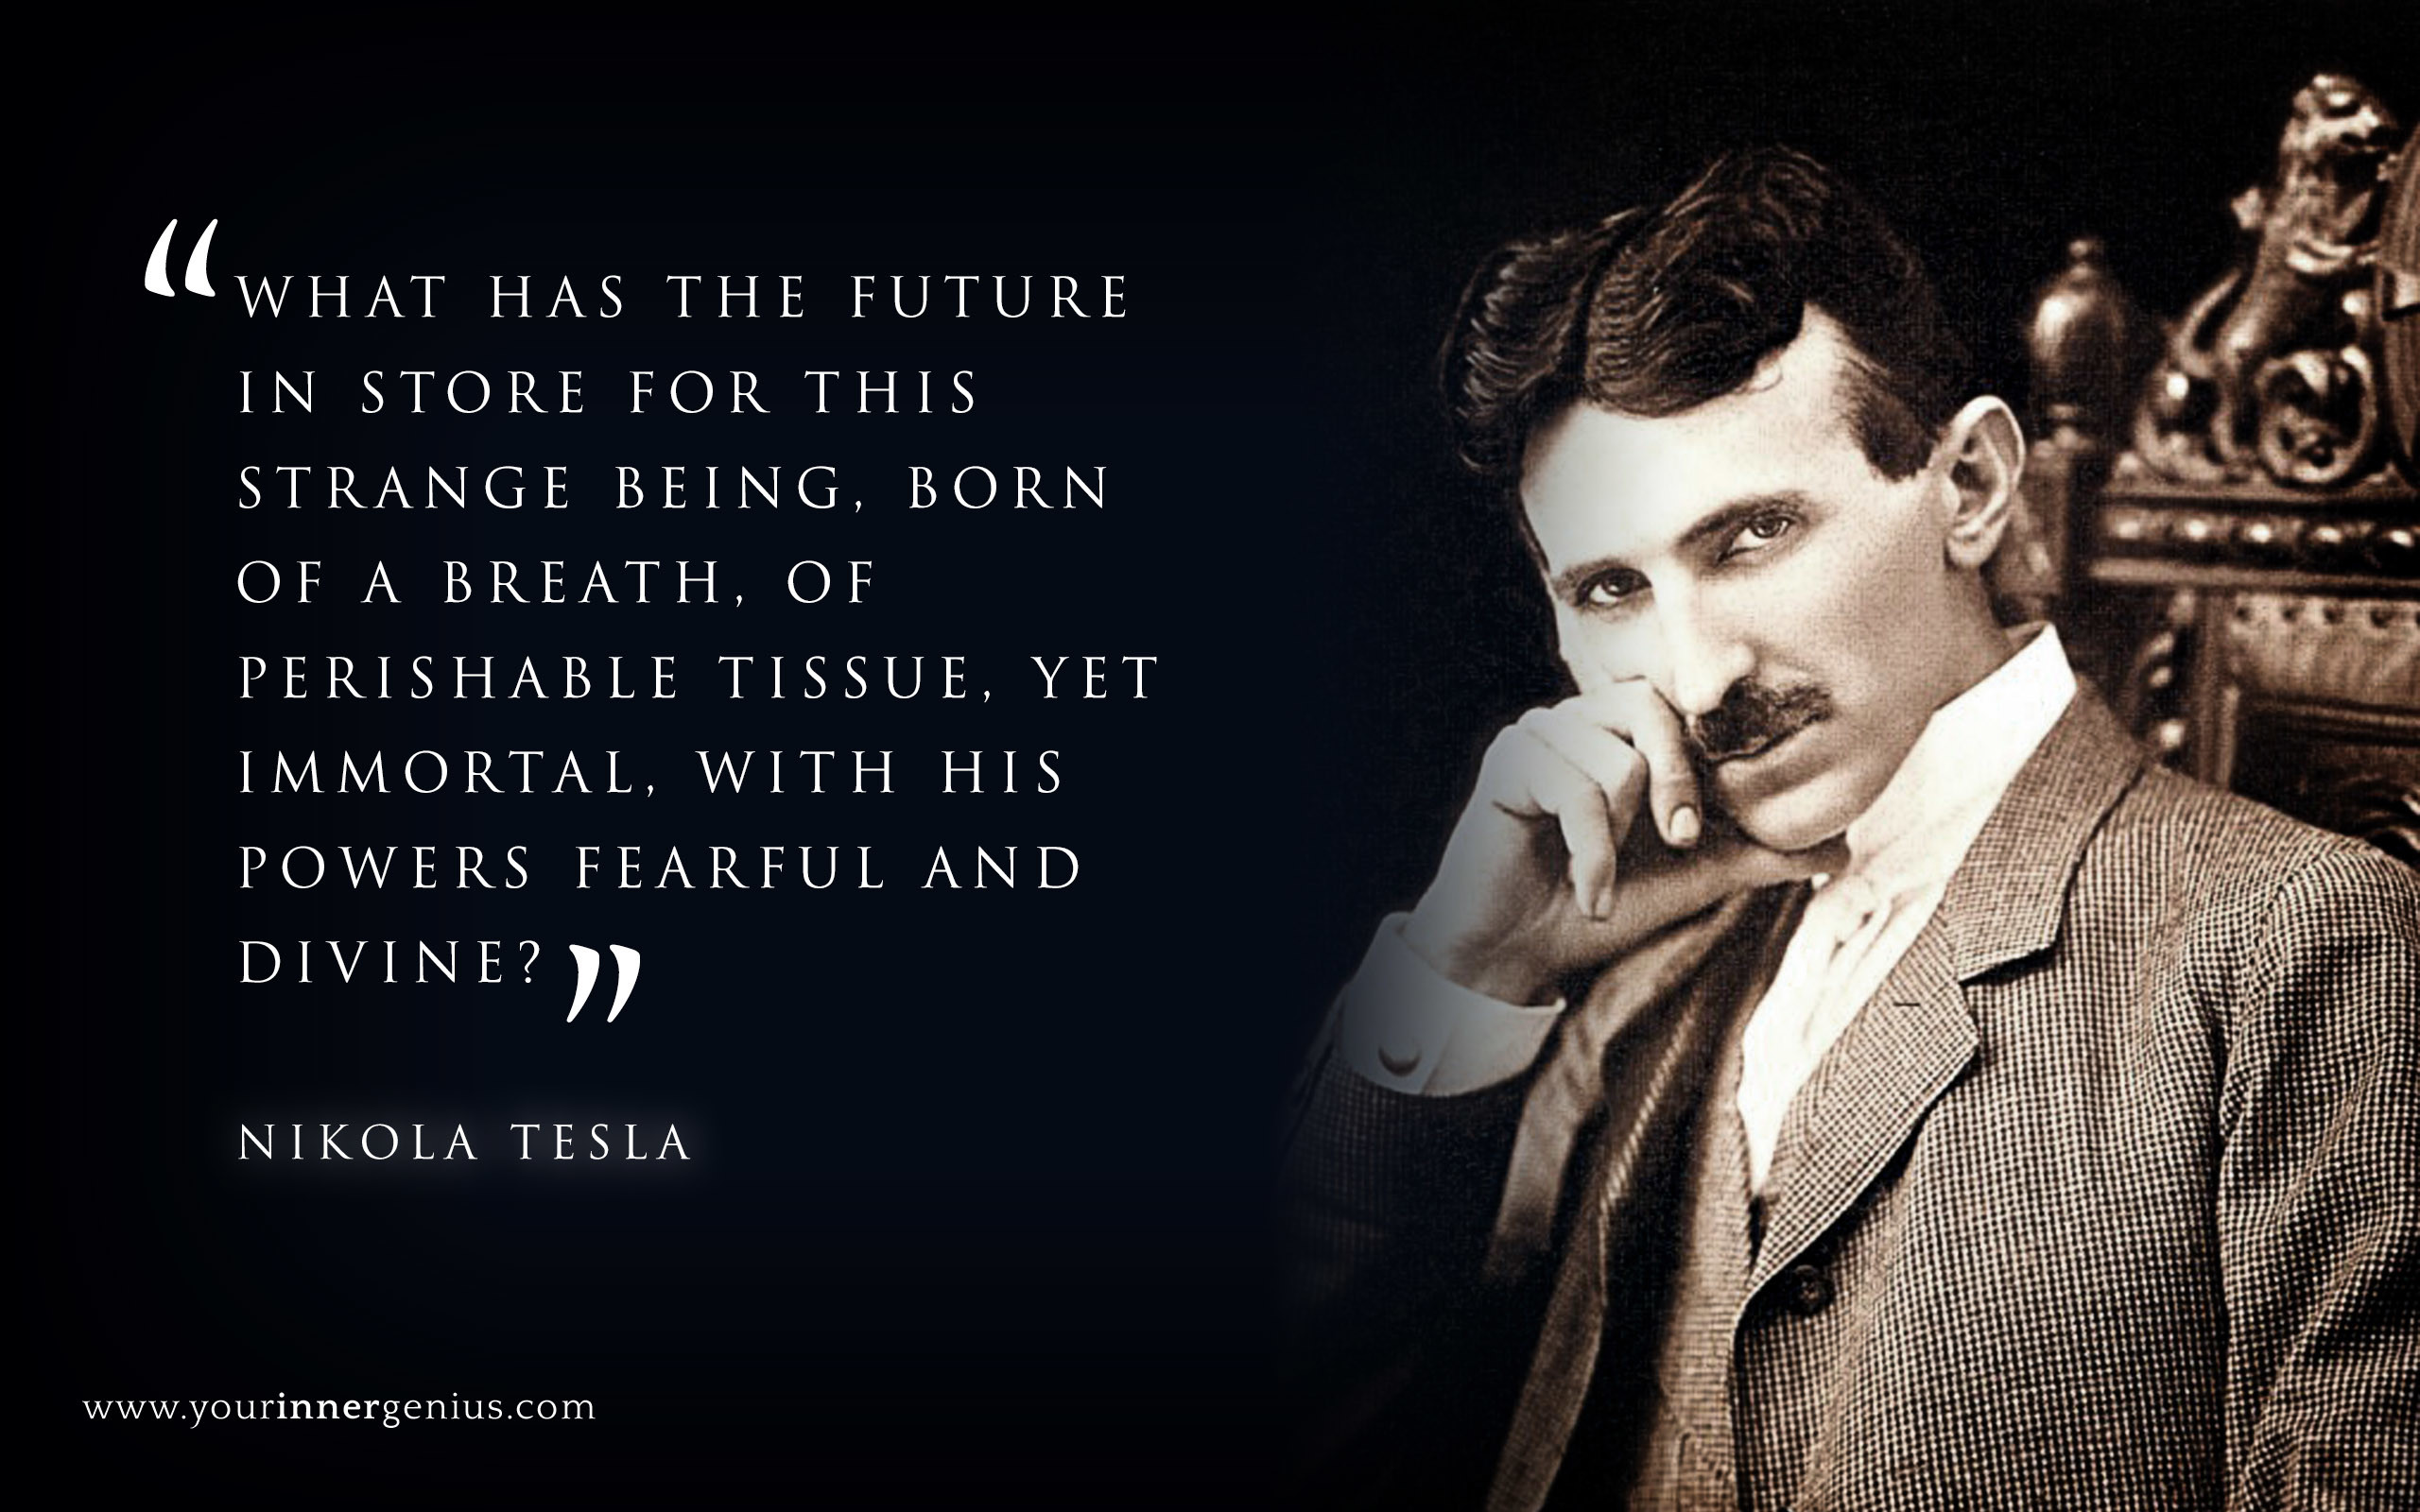 Nikola Tesla Images  Browse 657 Stock Photos Vectors and Video  Adobe  Stock